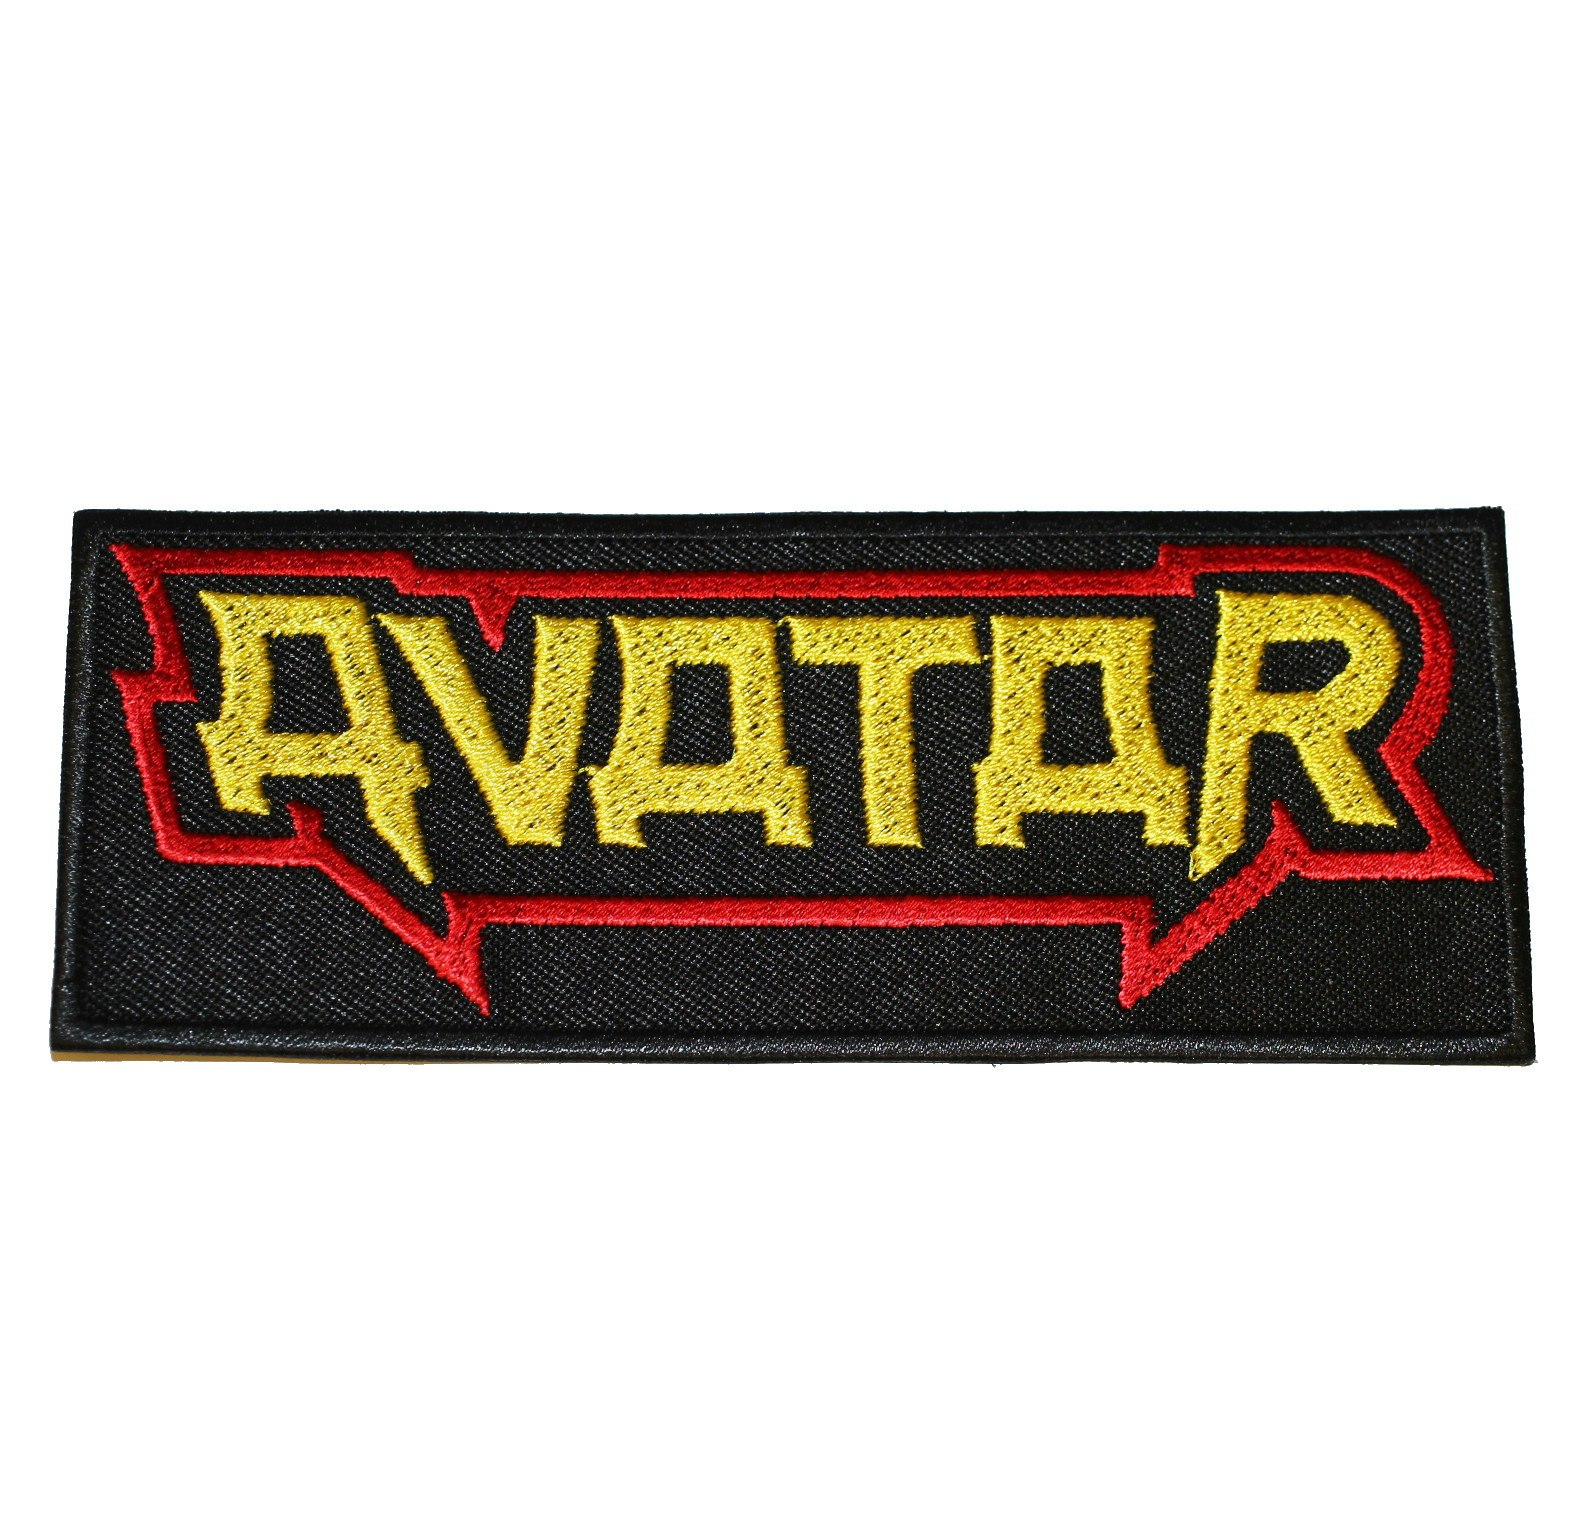 Avatar logo patch